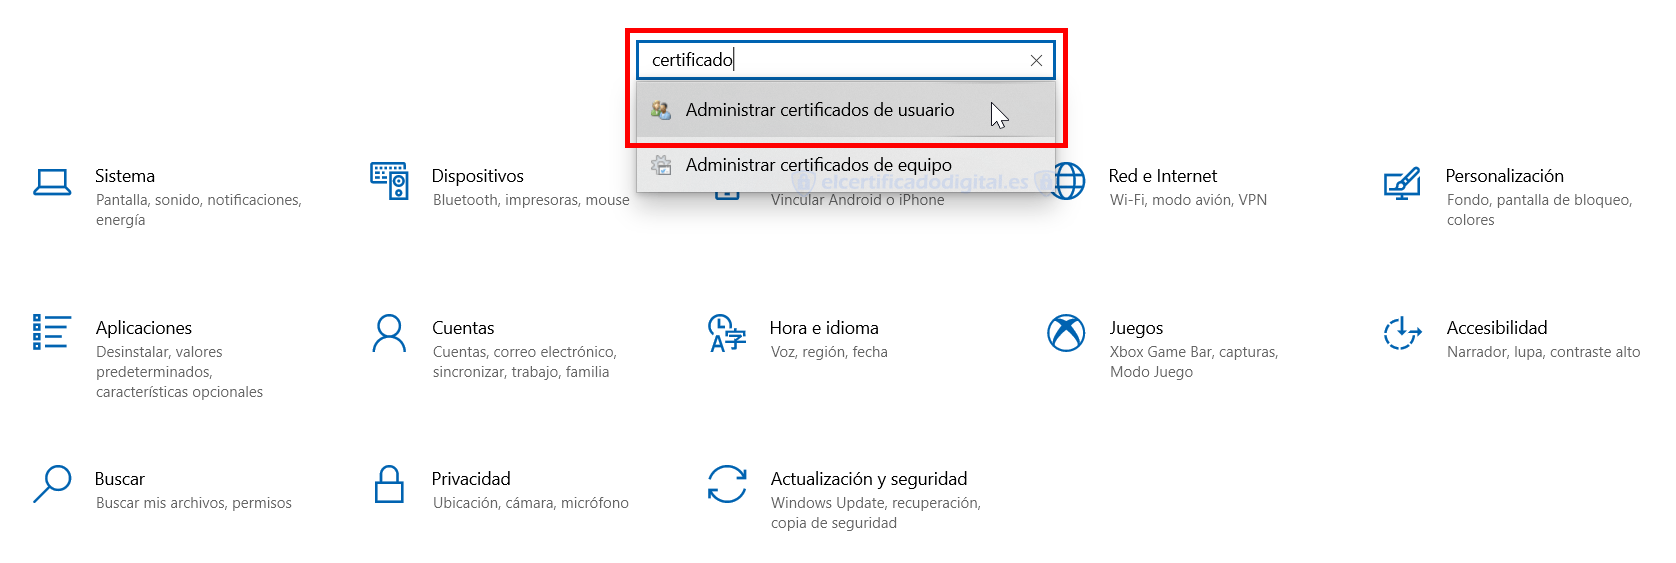 Administrador de Certificados de Windows